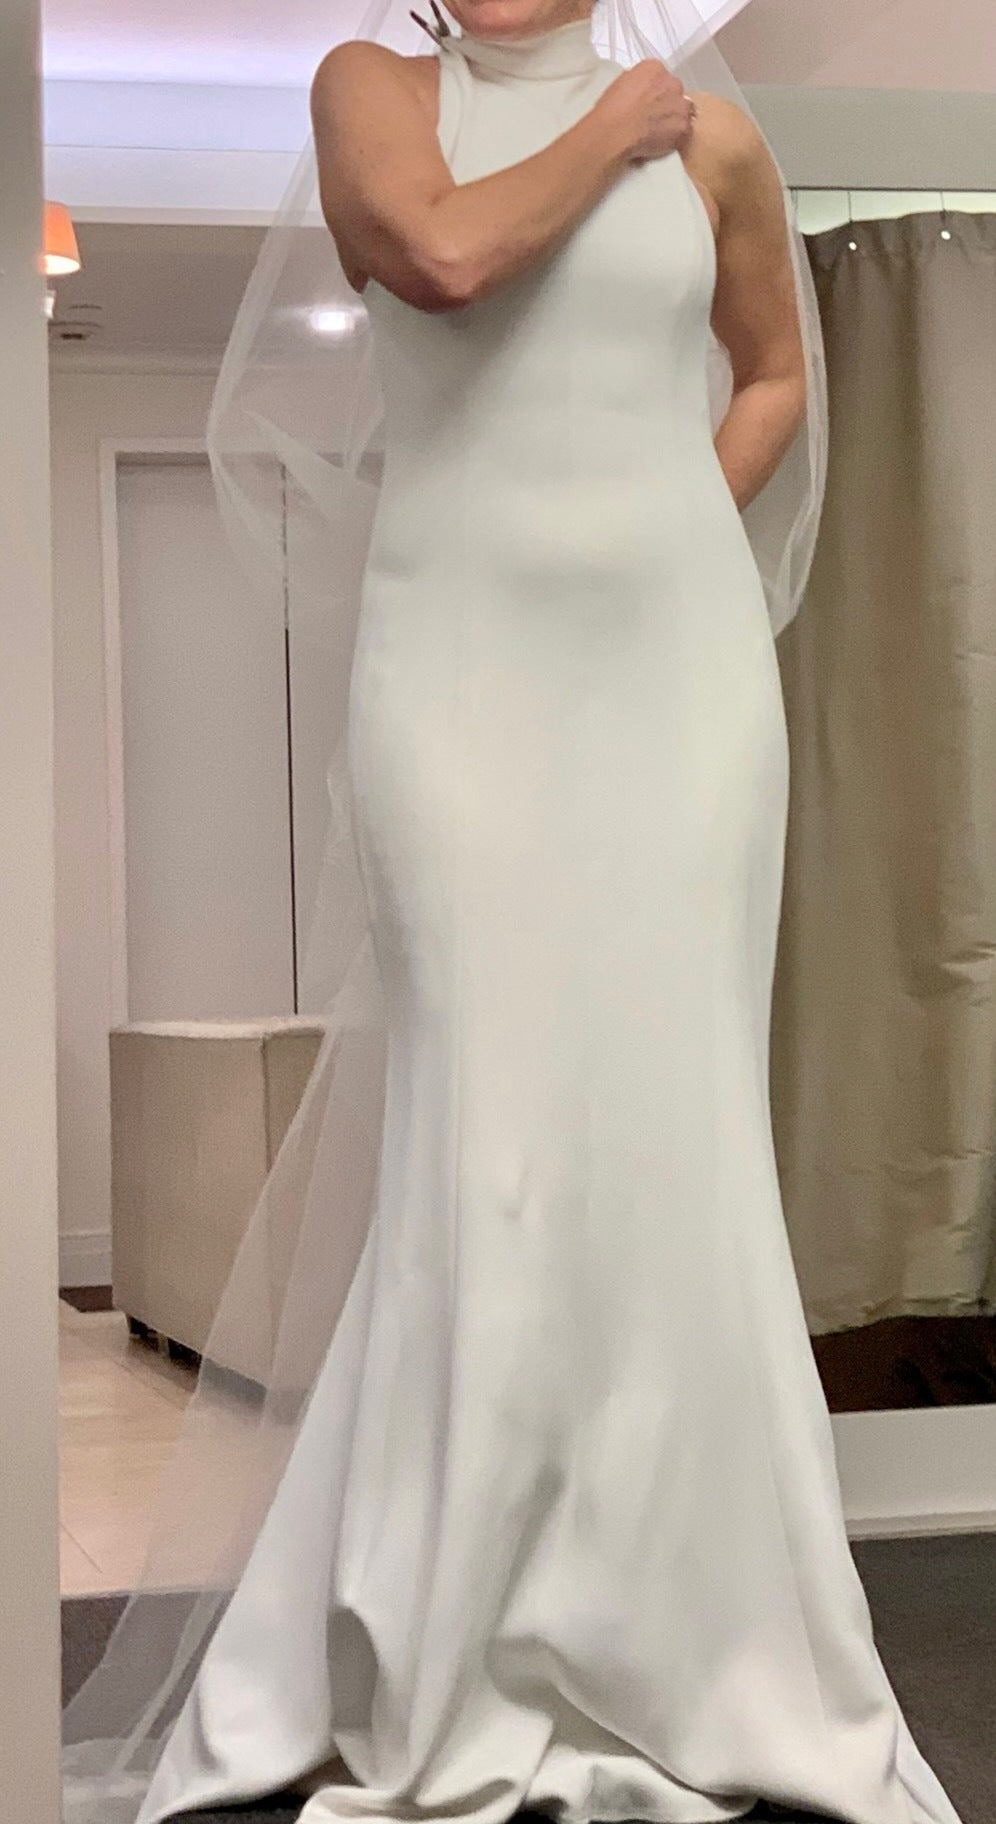 Carolina Herrera 'Iris' wedding dress size-06 NEW